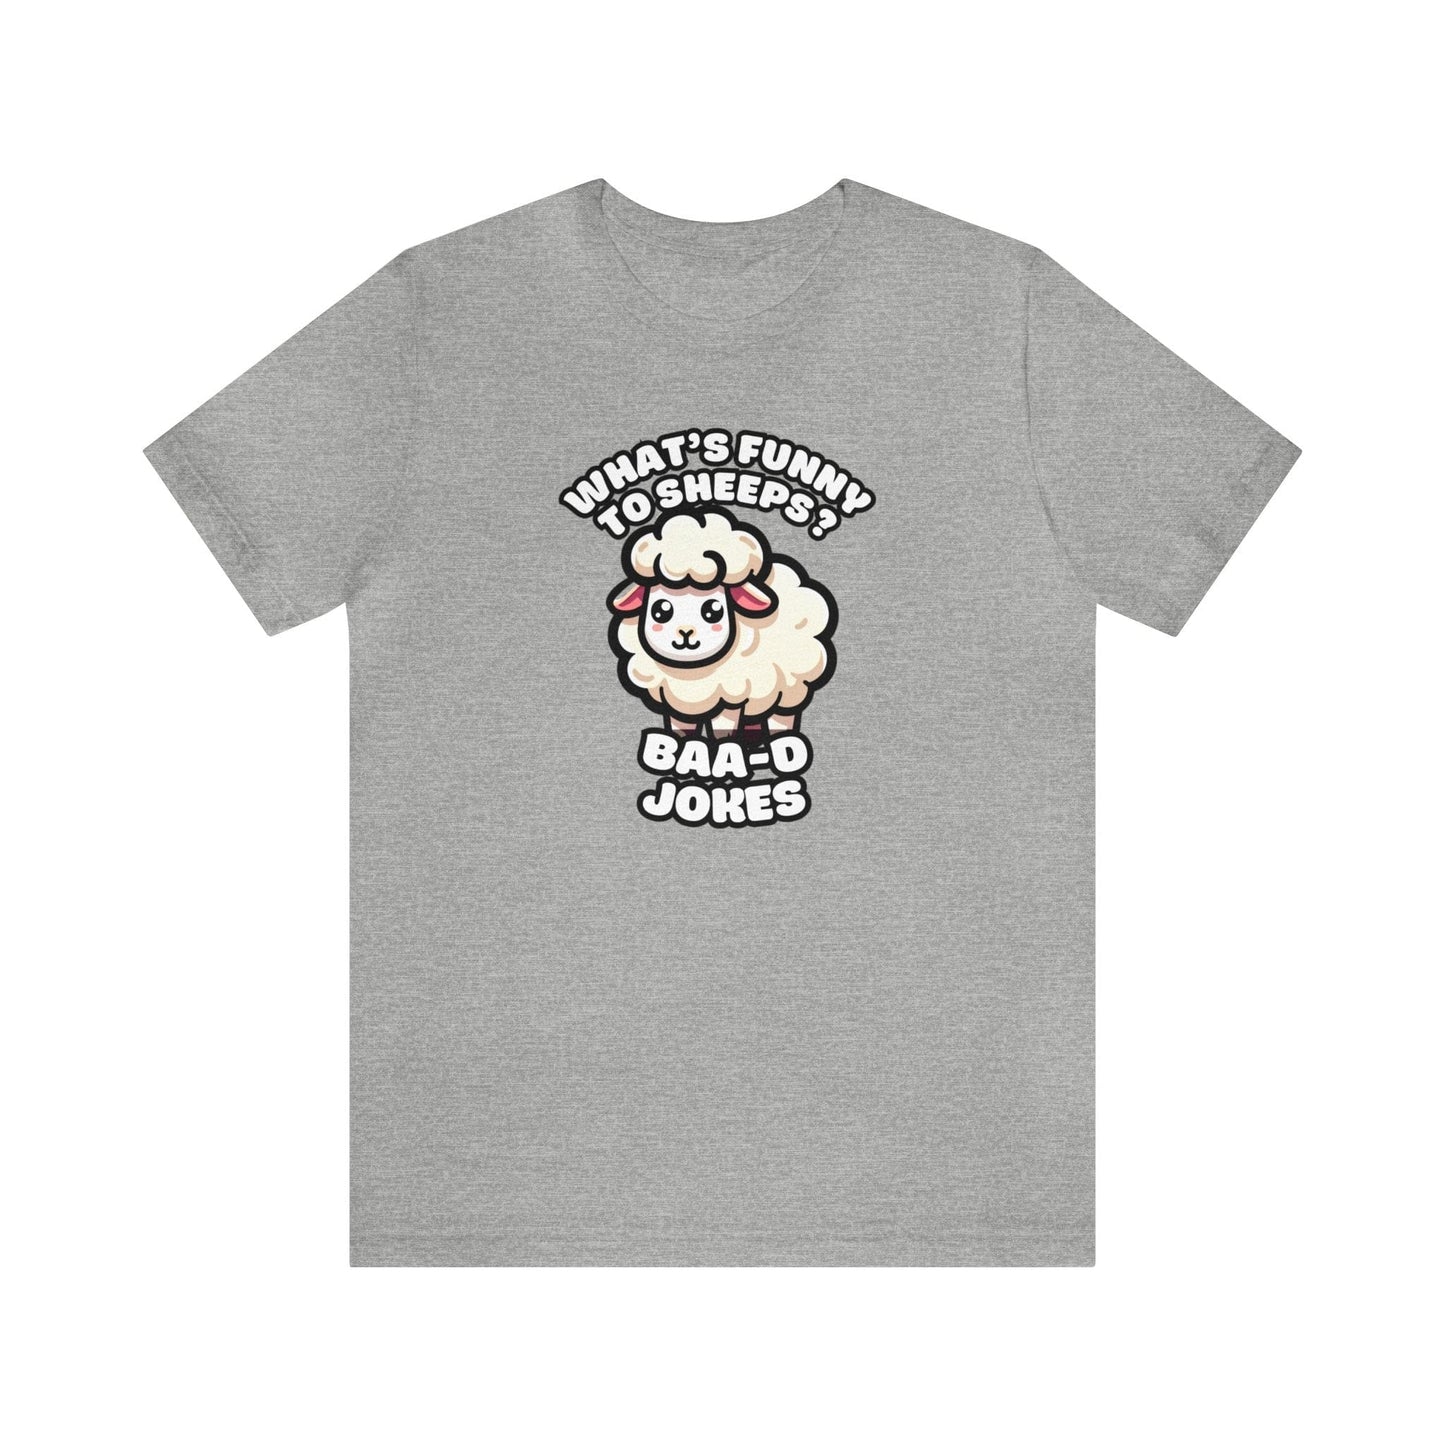 Baa-d Jokes - Sheep T-shirt Gray / S